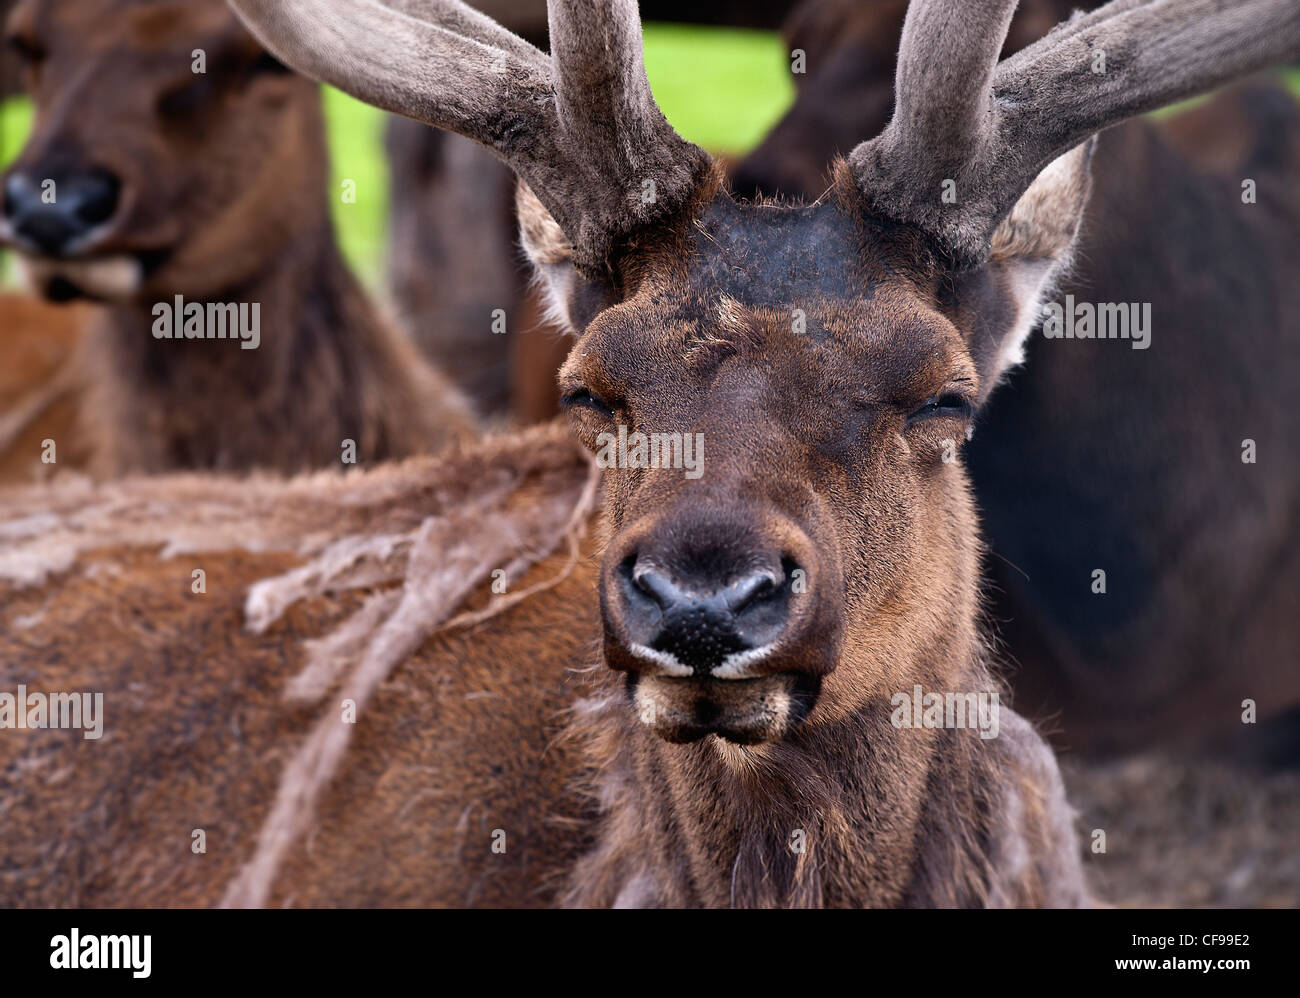 Buck deer, Alaska Stock Photo